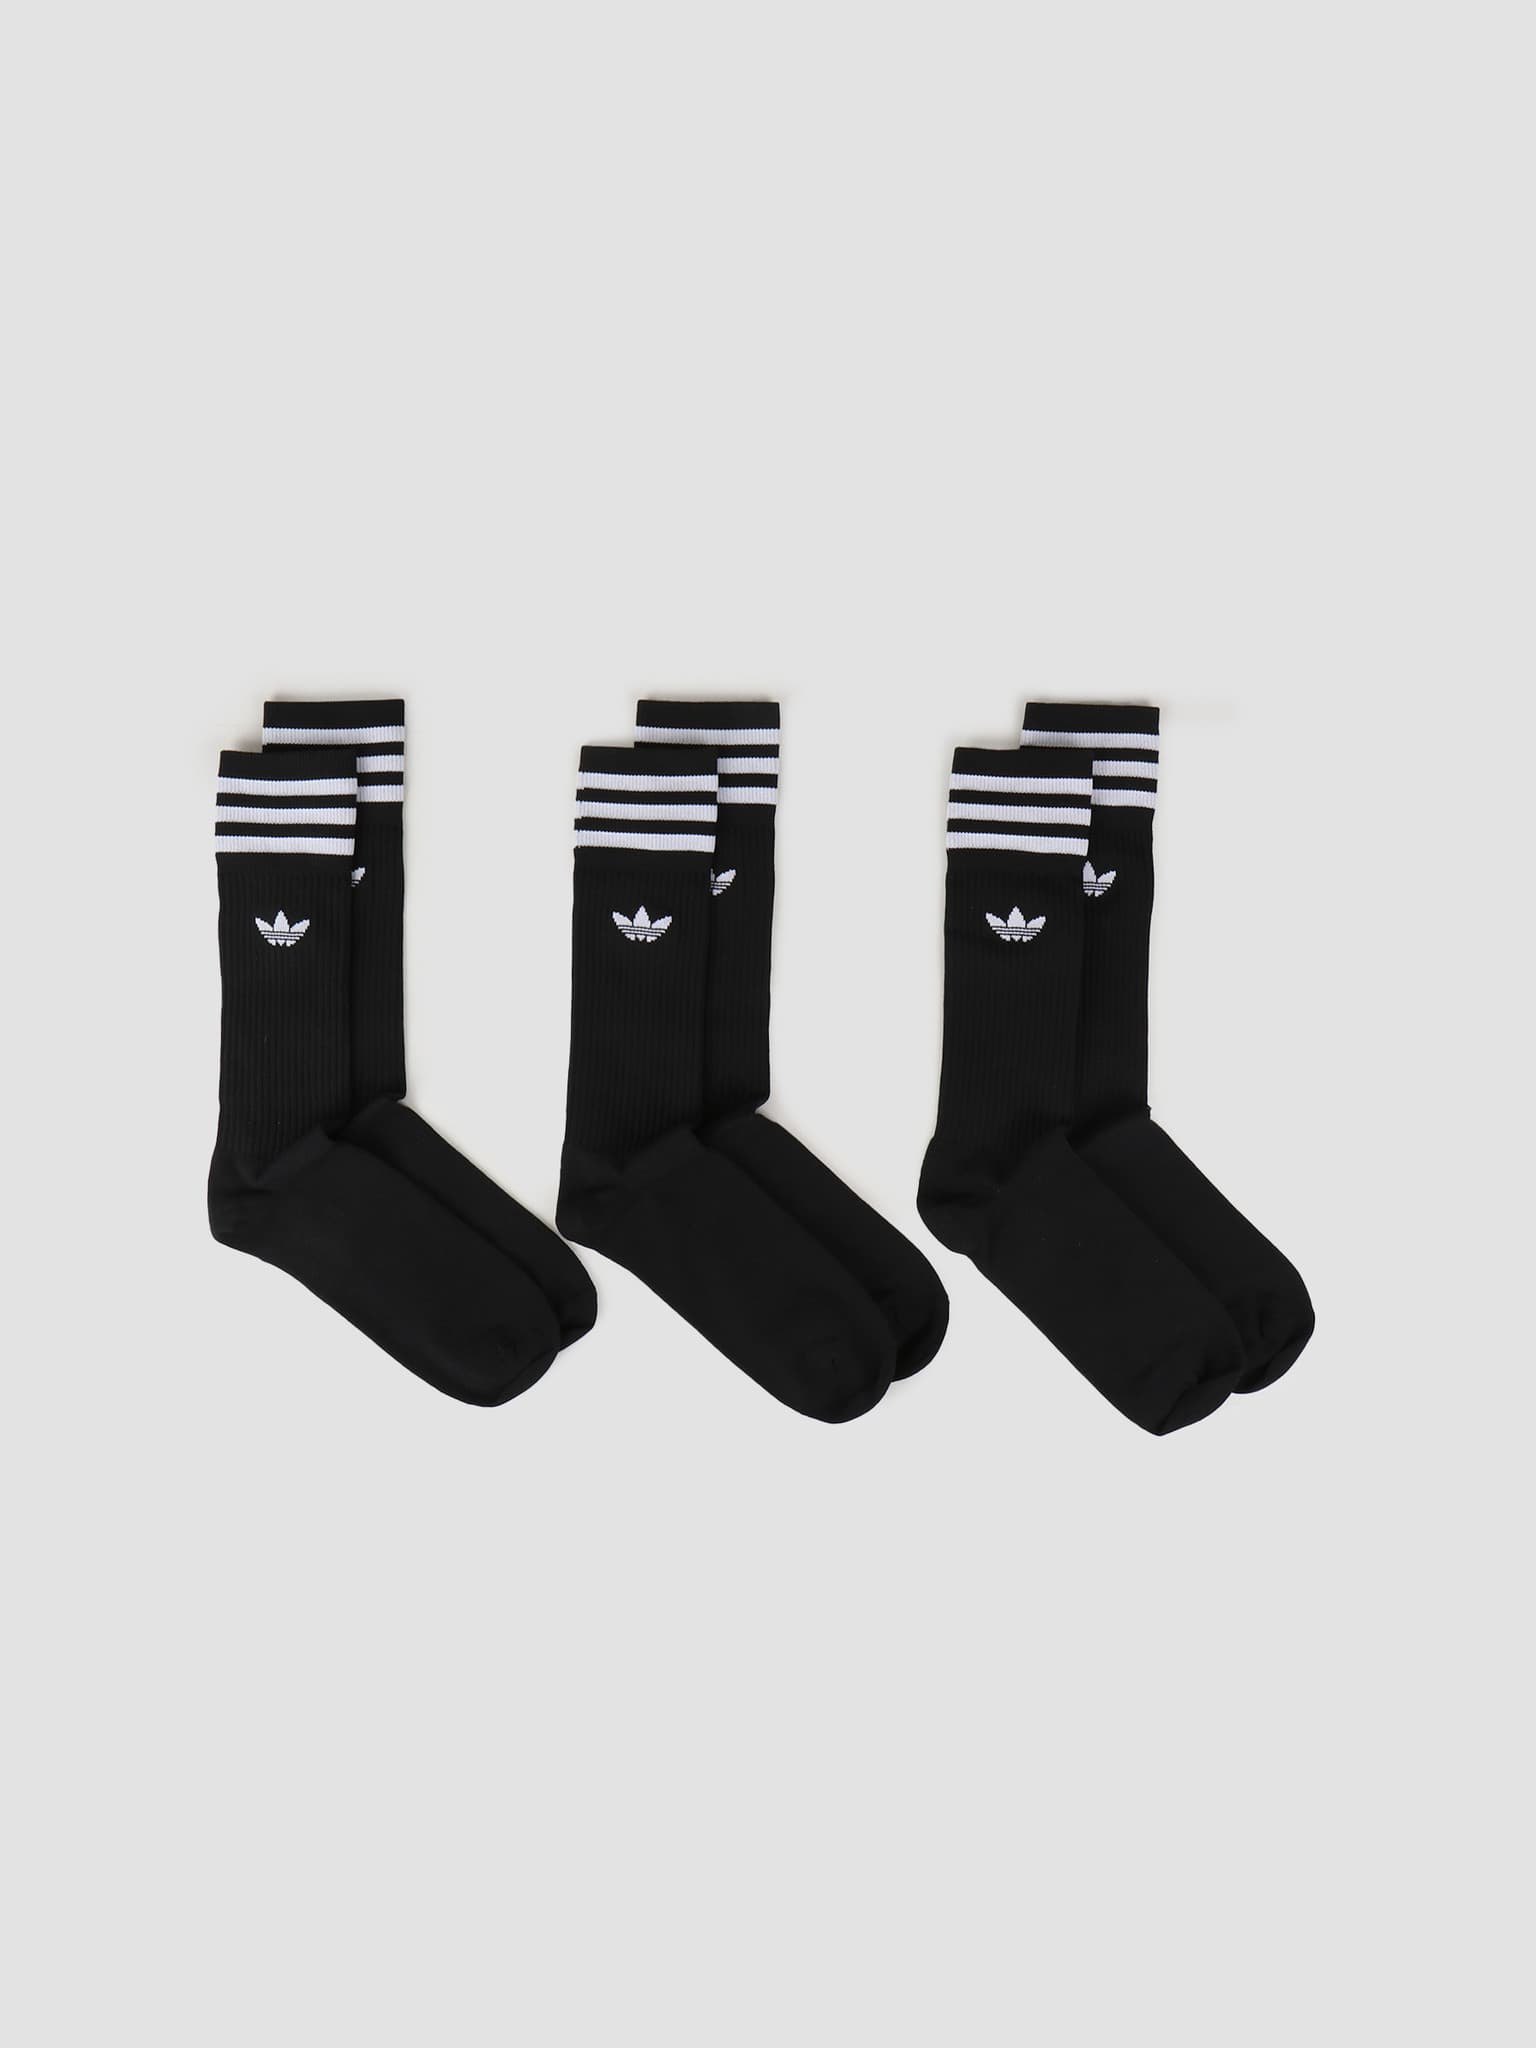 Solid Crew Sock Black White S21490